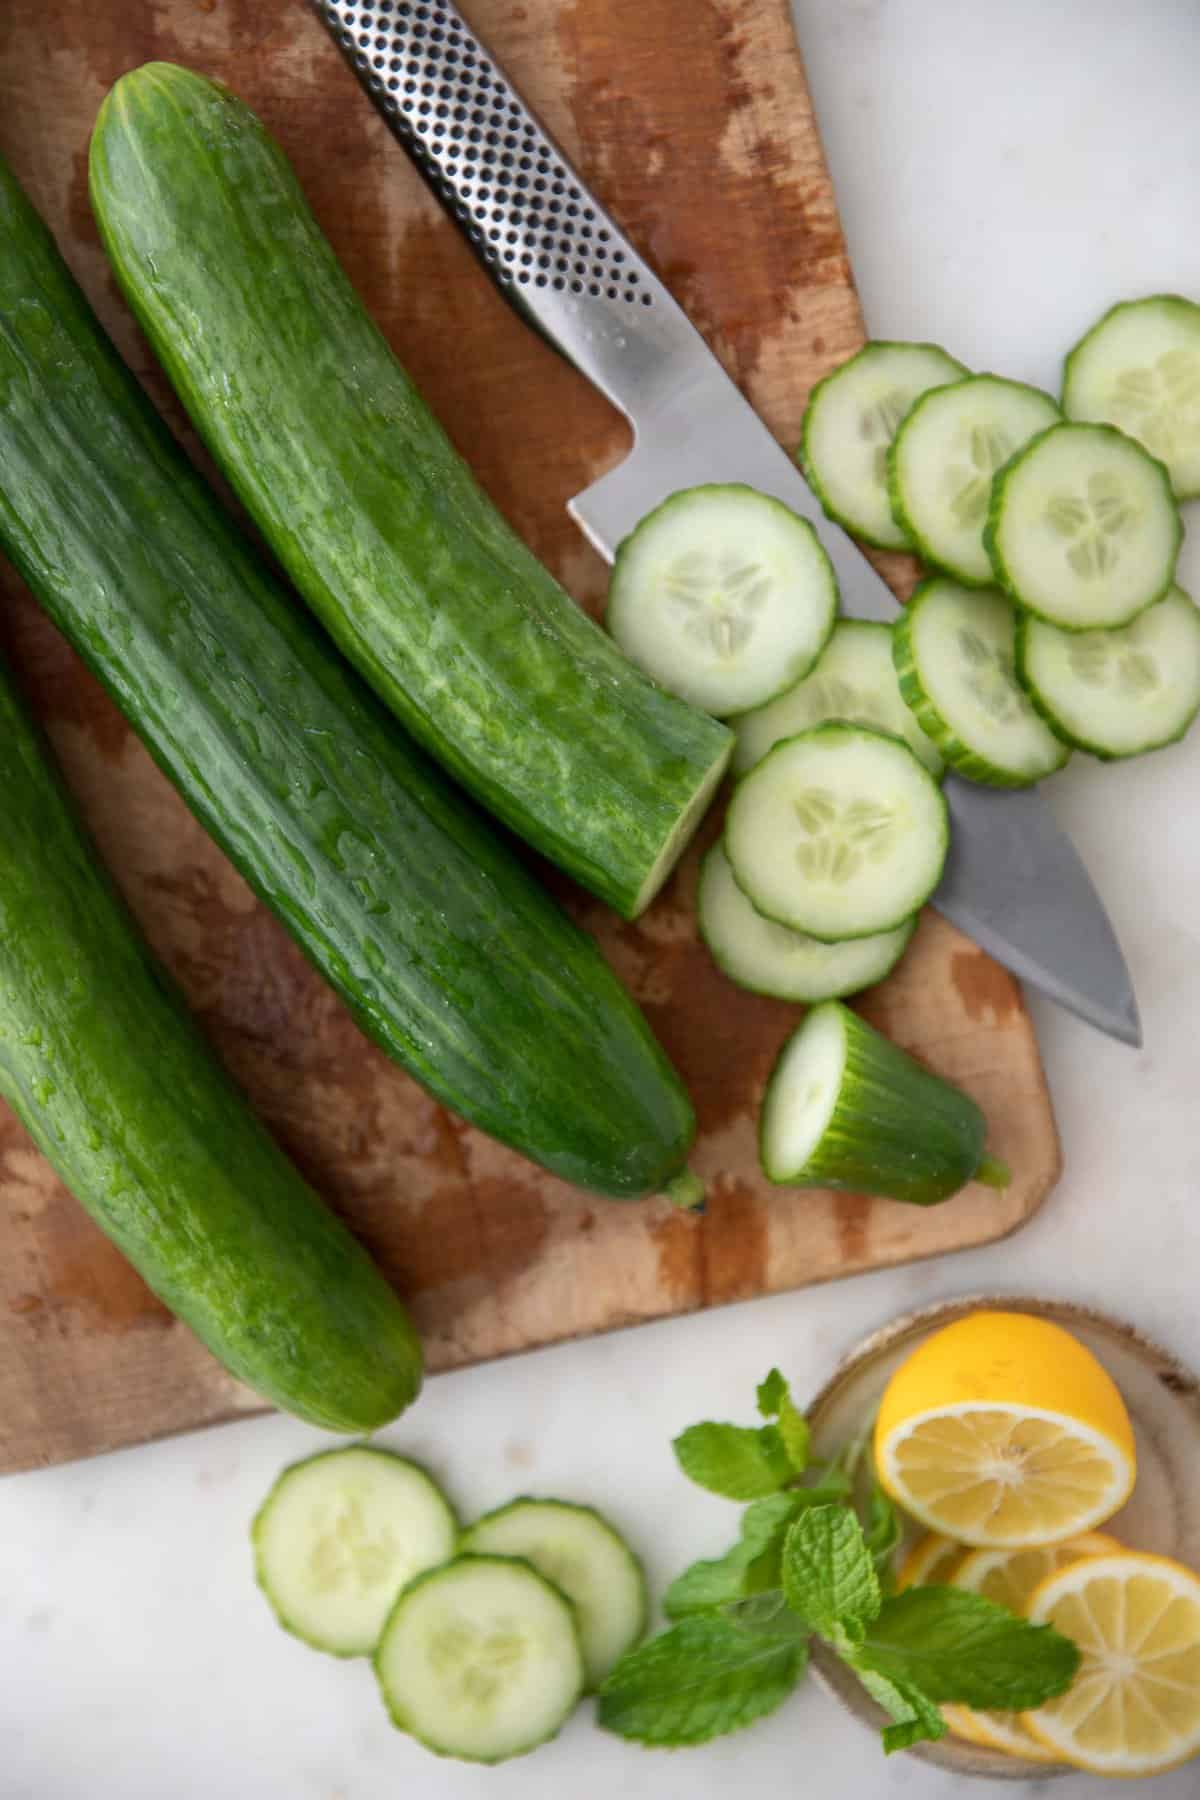 English Cucumber  Harvest kitchen, Cucumber recipes, English cucumber